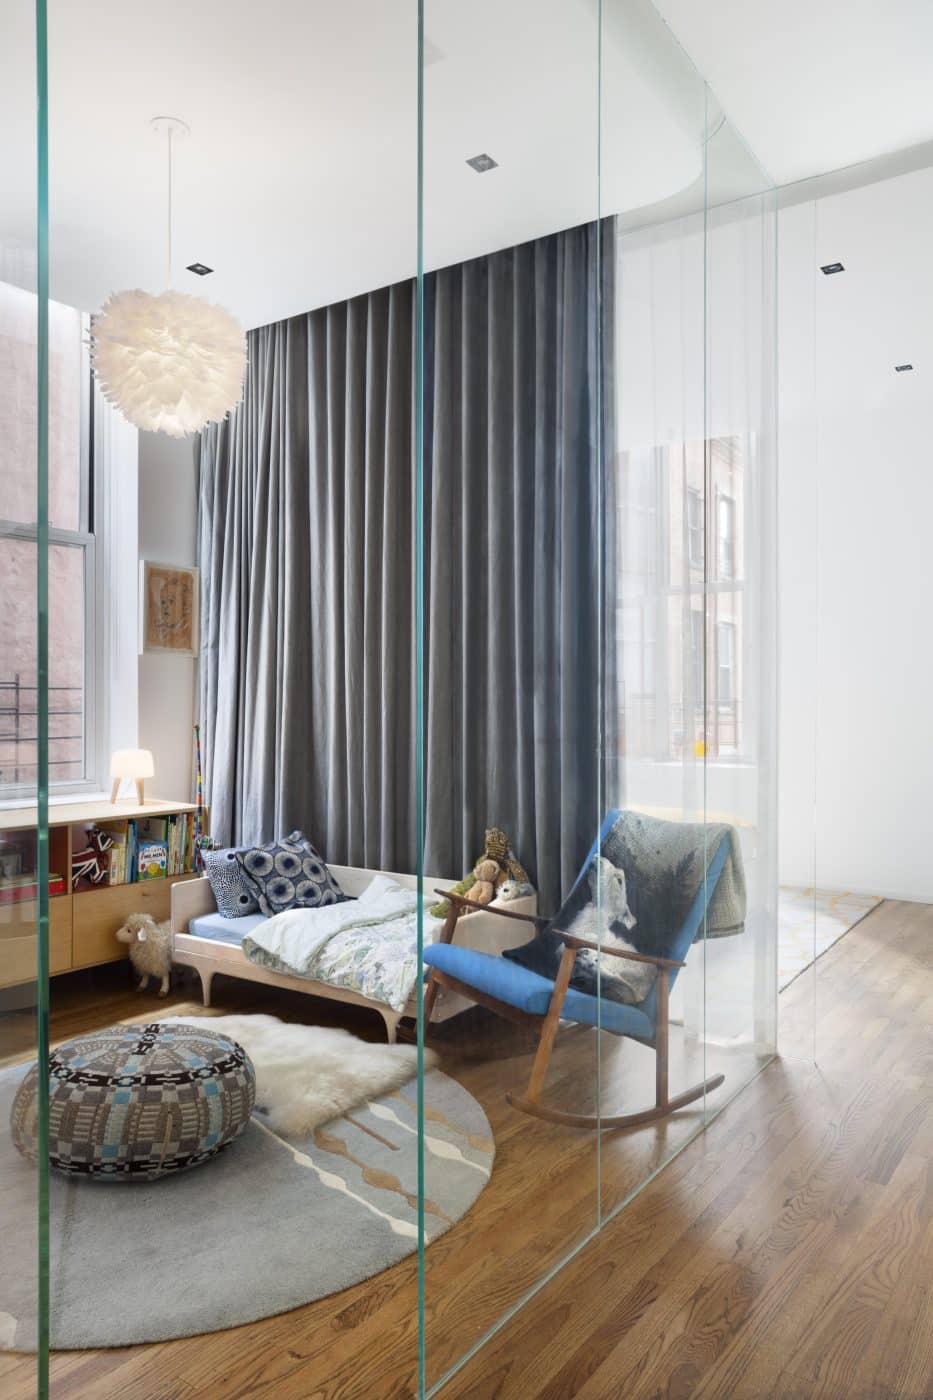 The children's bedroom of interior designer Nina Barnieh-Blair's former home in New York City, a loft in Tribeca 